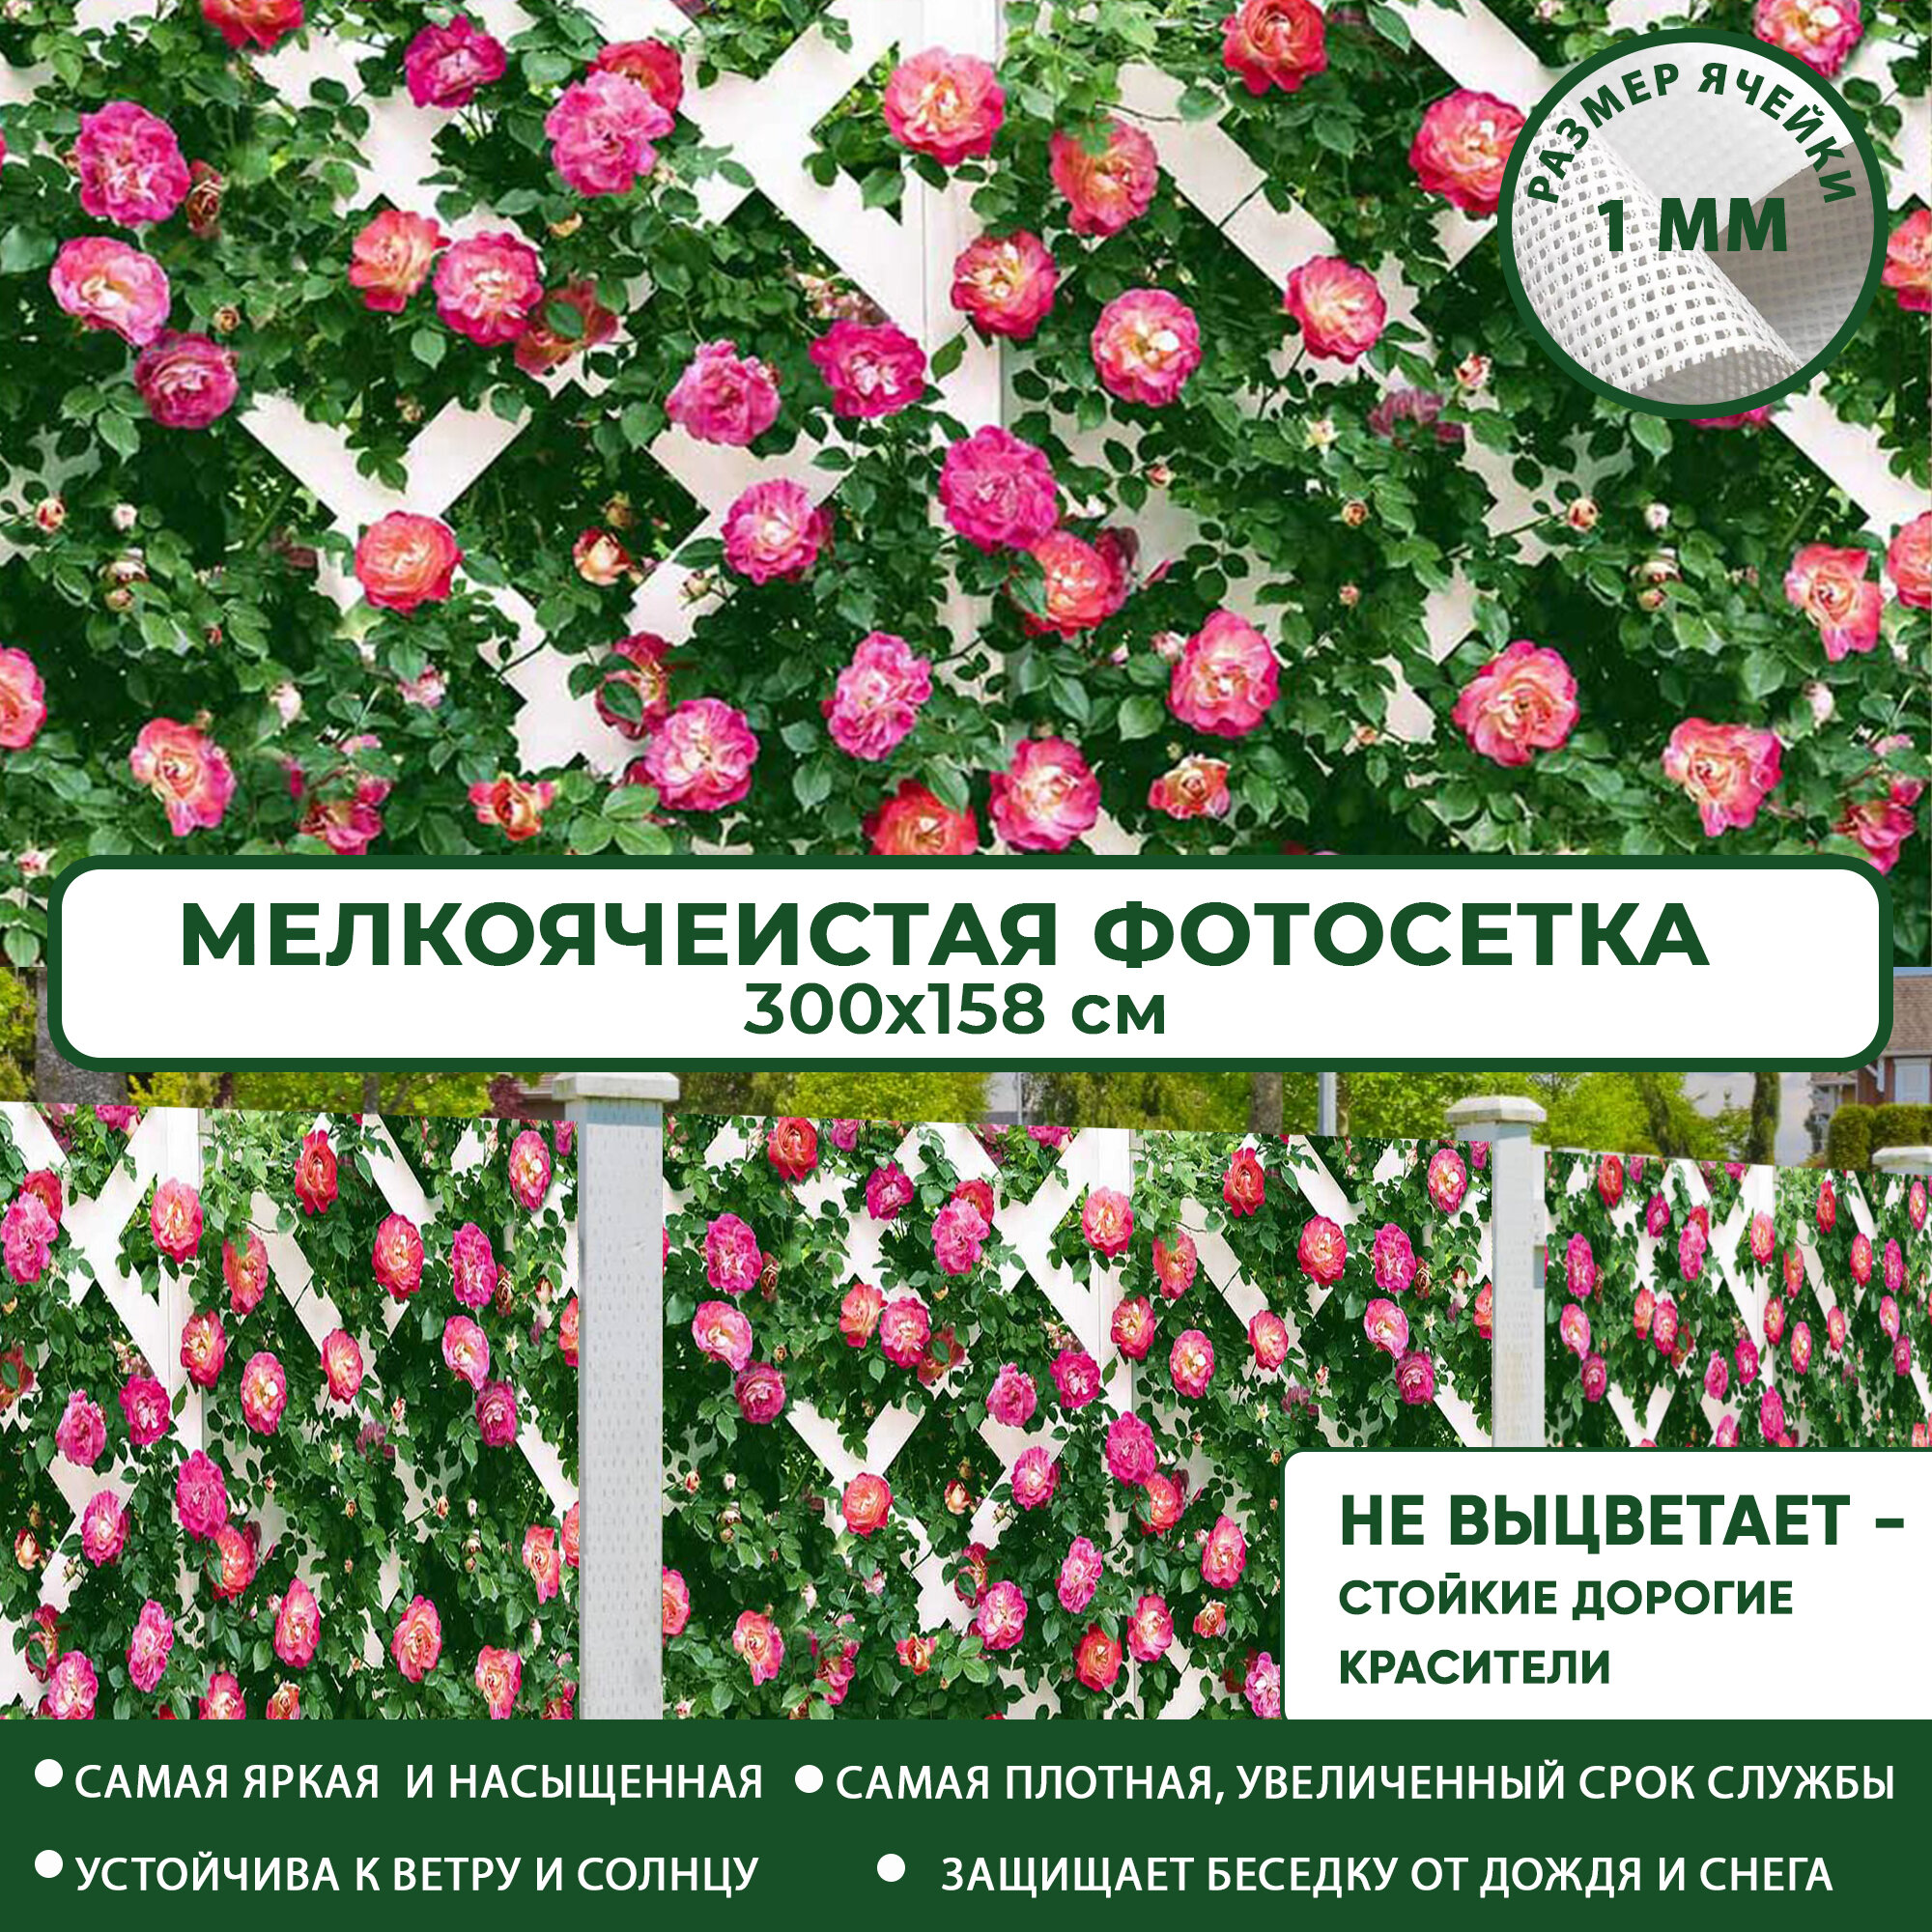 Фотосетка Мечта для забора беседки террасы 300x158 см, "Розовая стена" , фотофасад для дома дачи сада